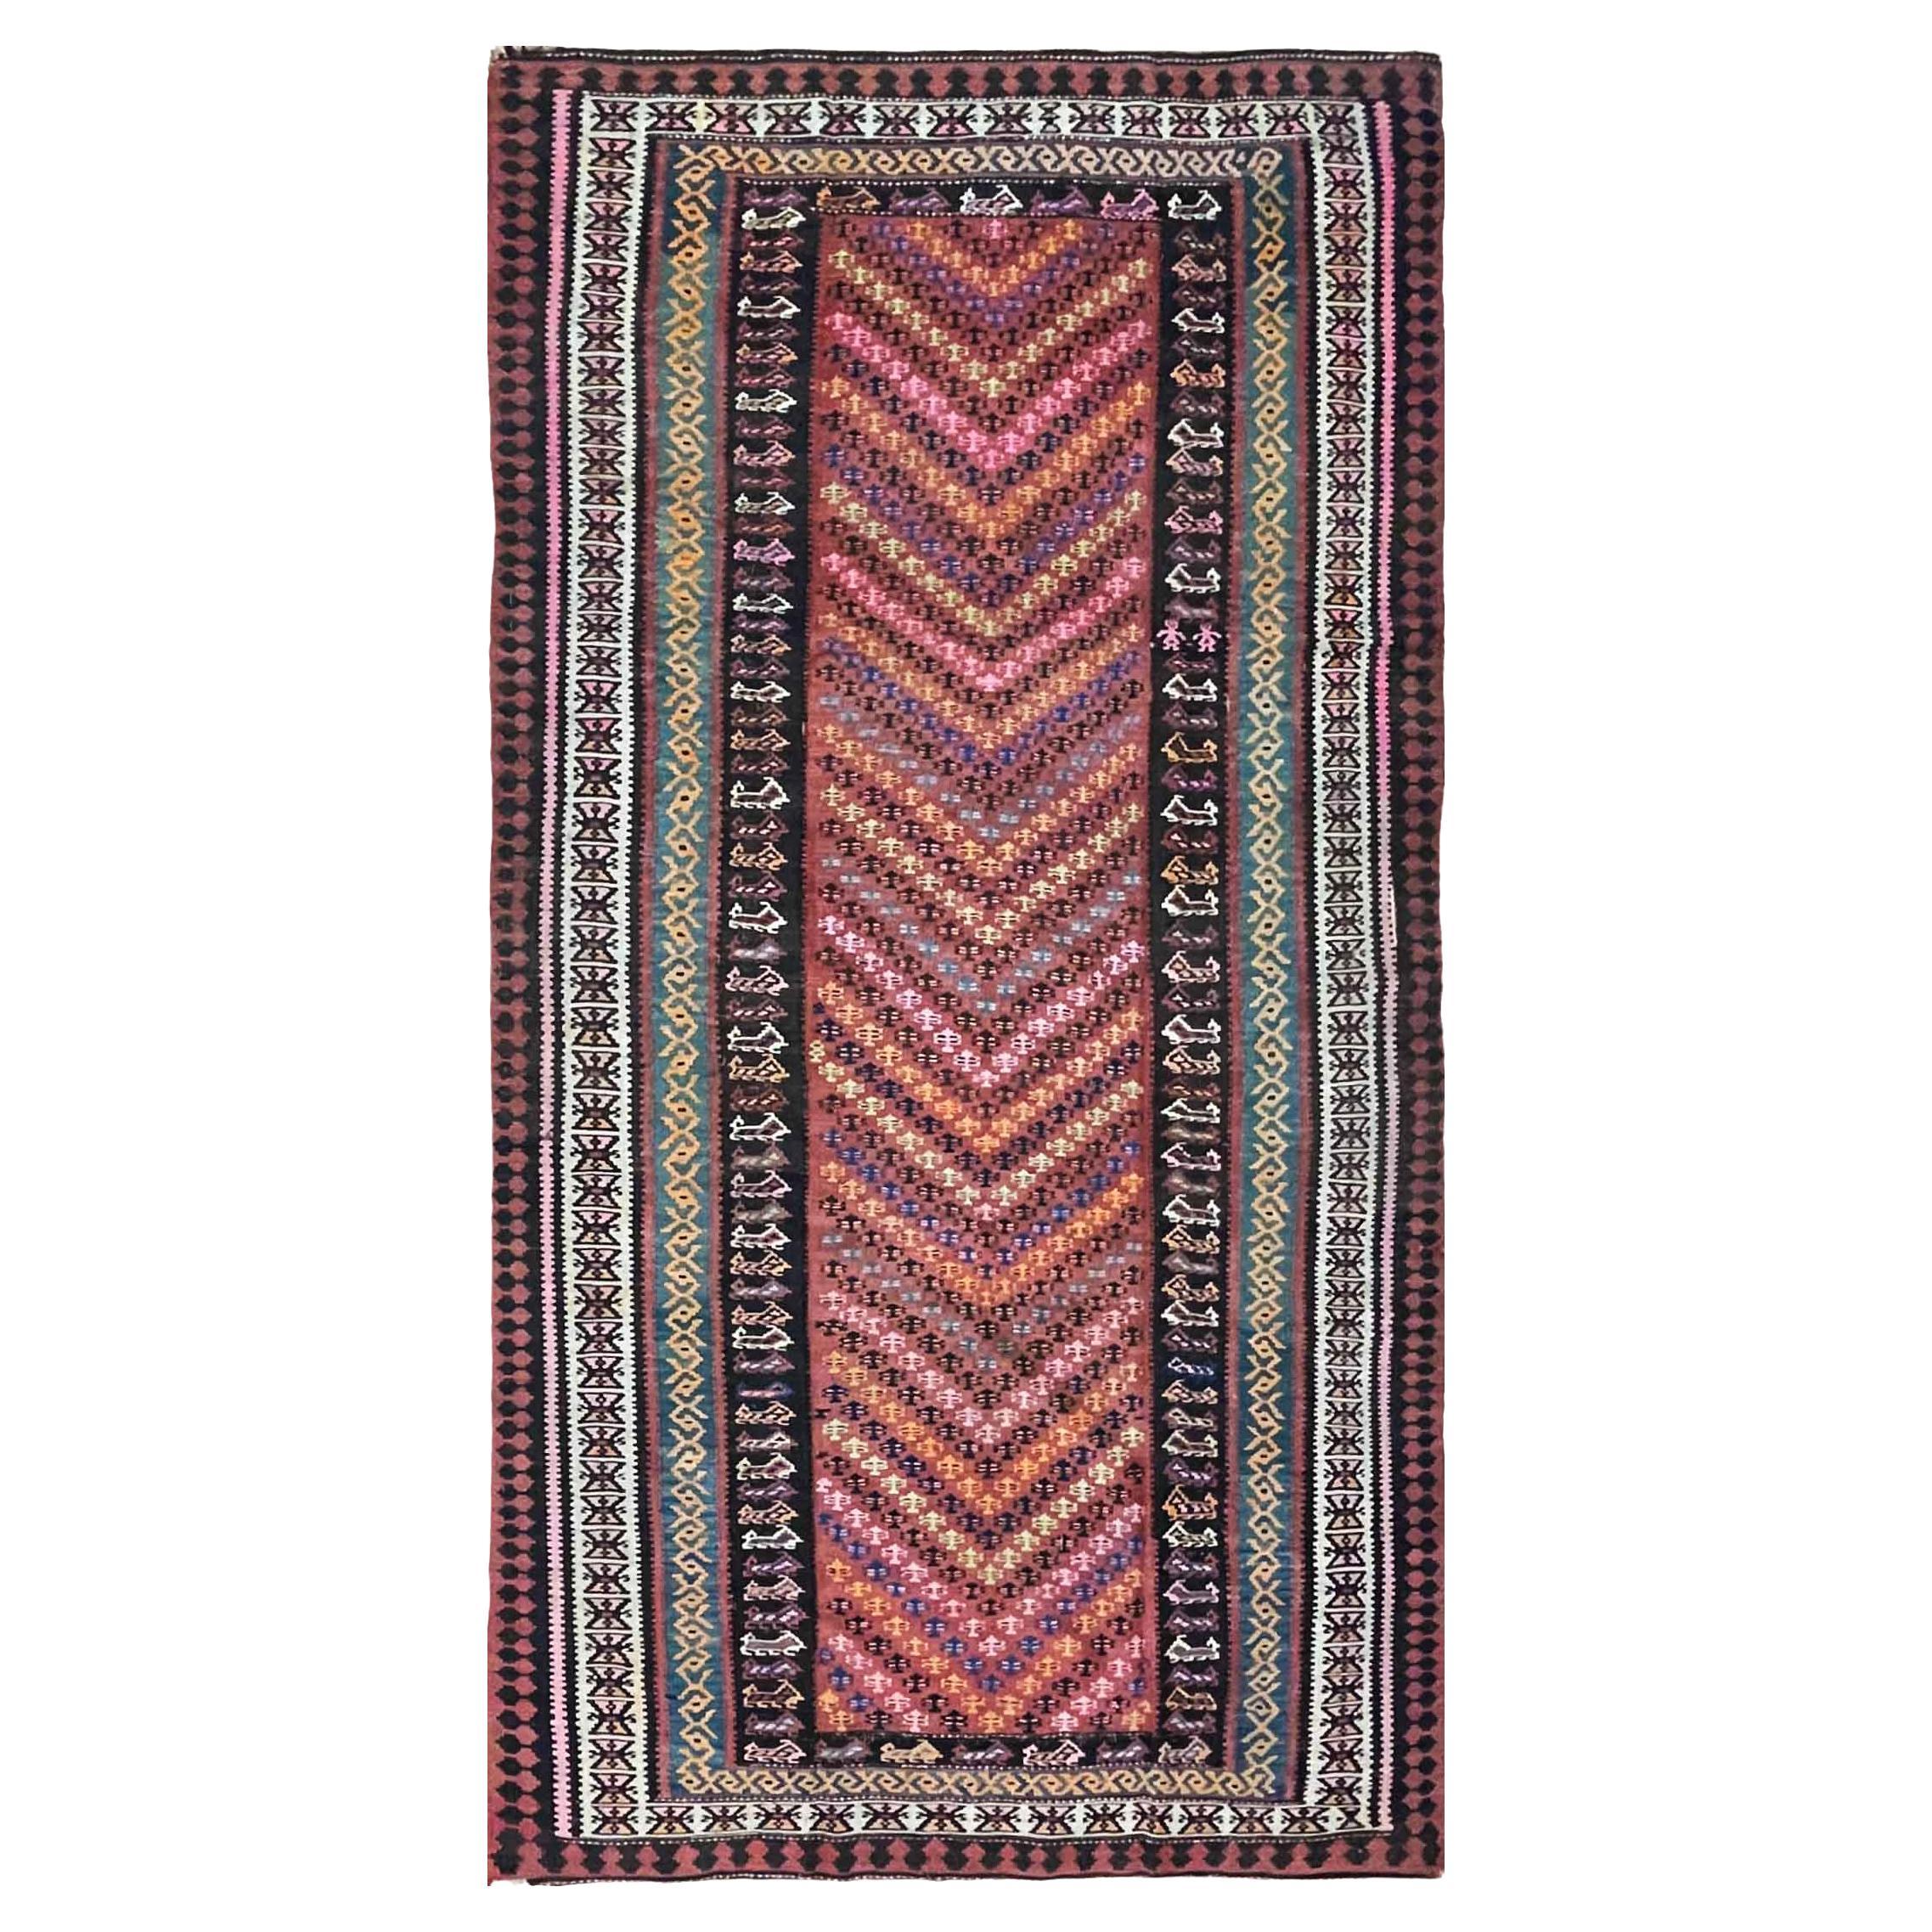 Antique Turkish Kilim Flat weave, c-1900's